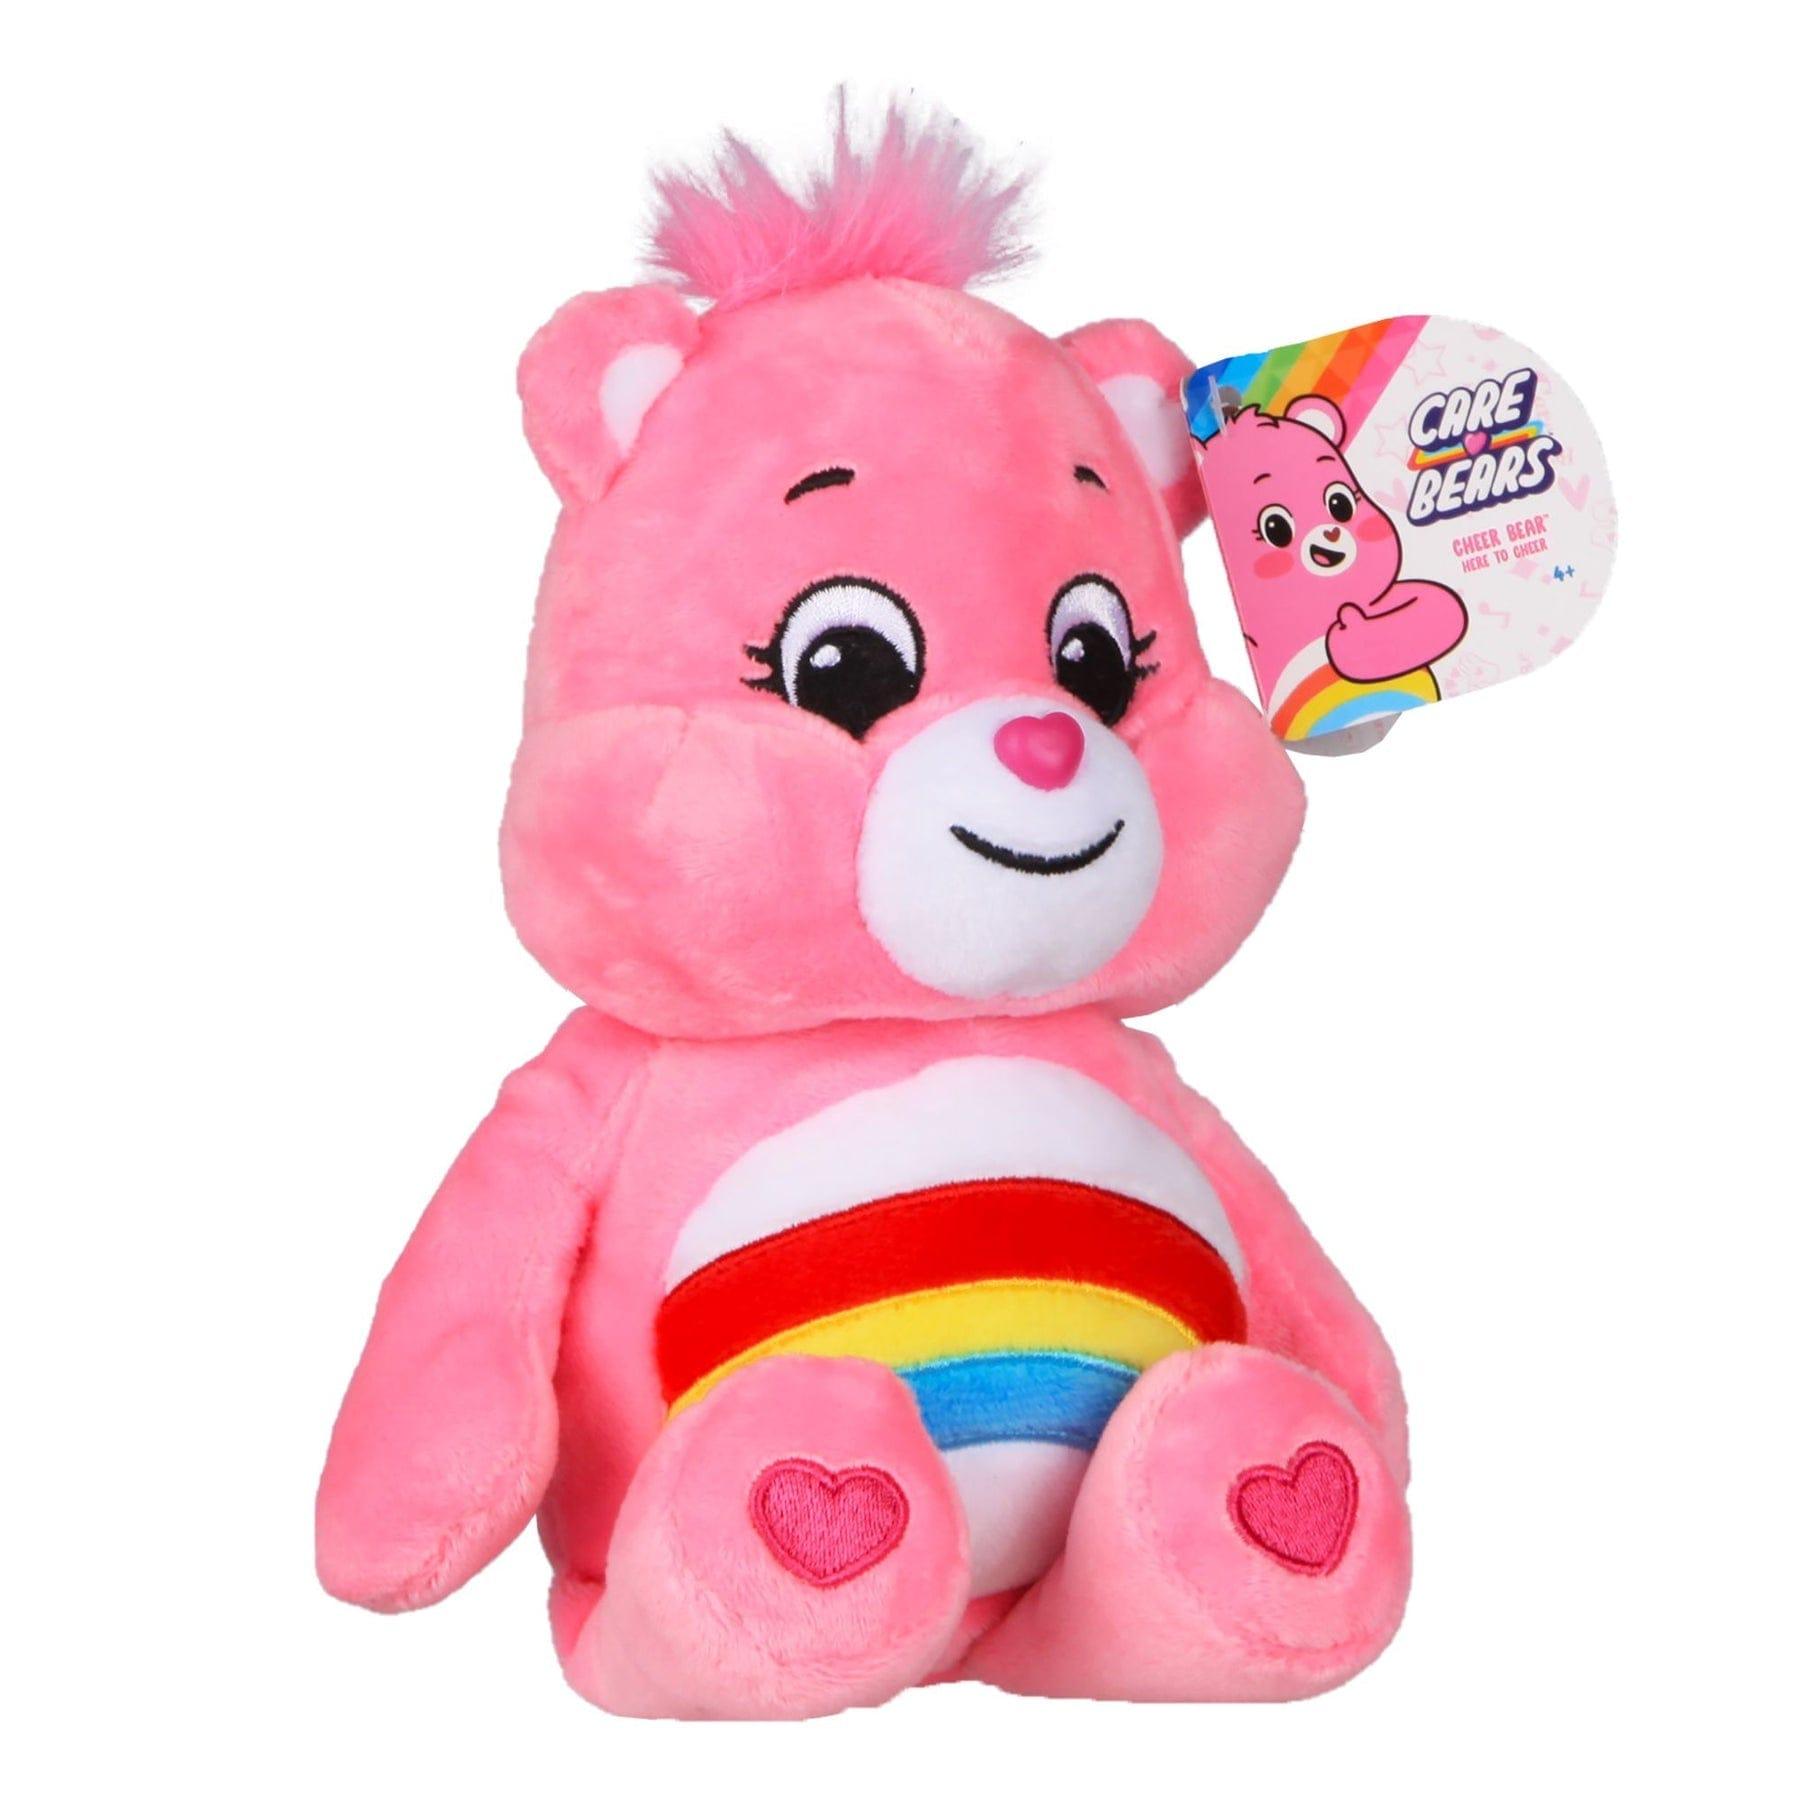 Care Bears 9 inch Plush - I Care Bear - Soft Huggable Material!